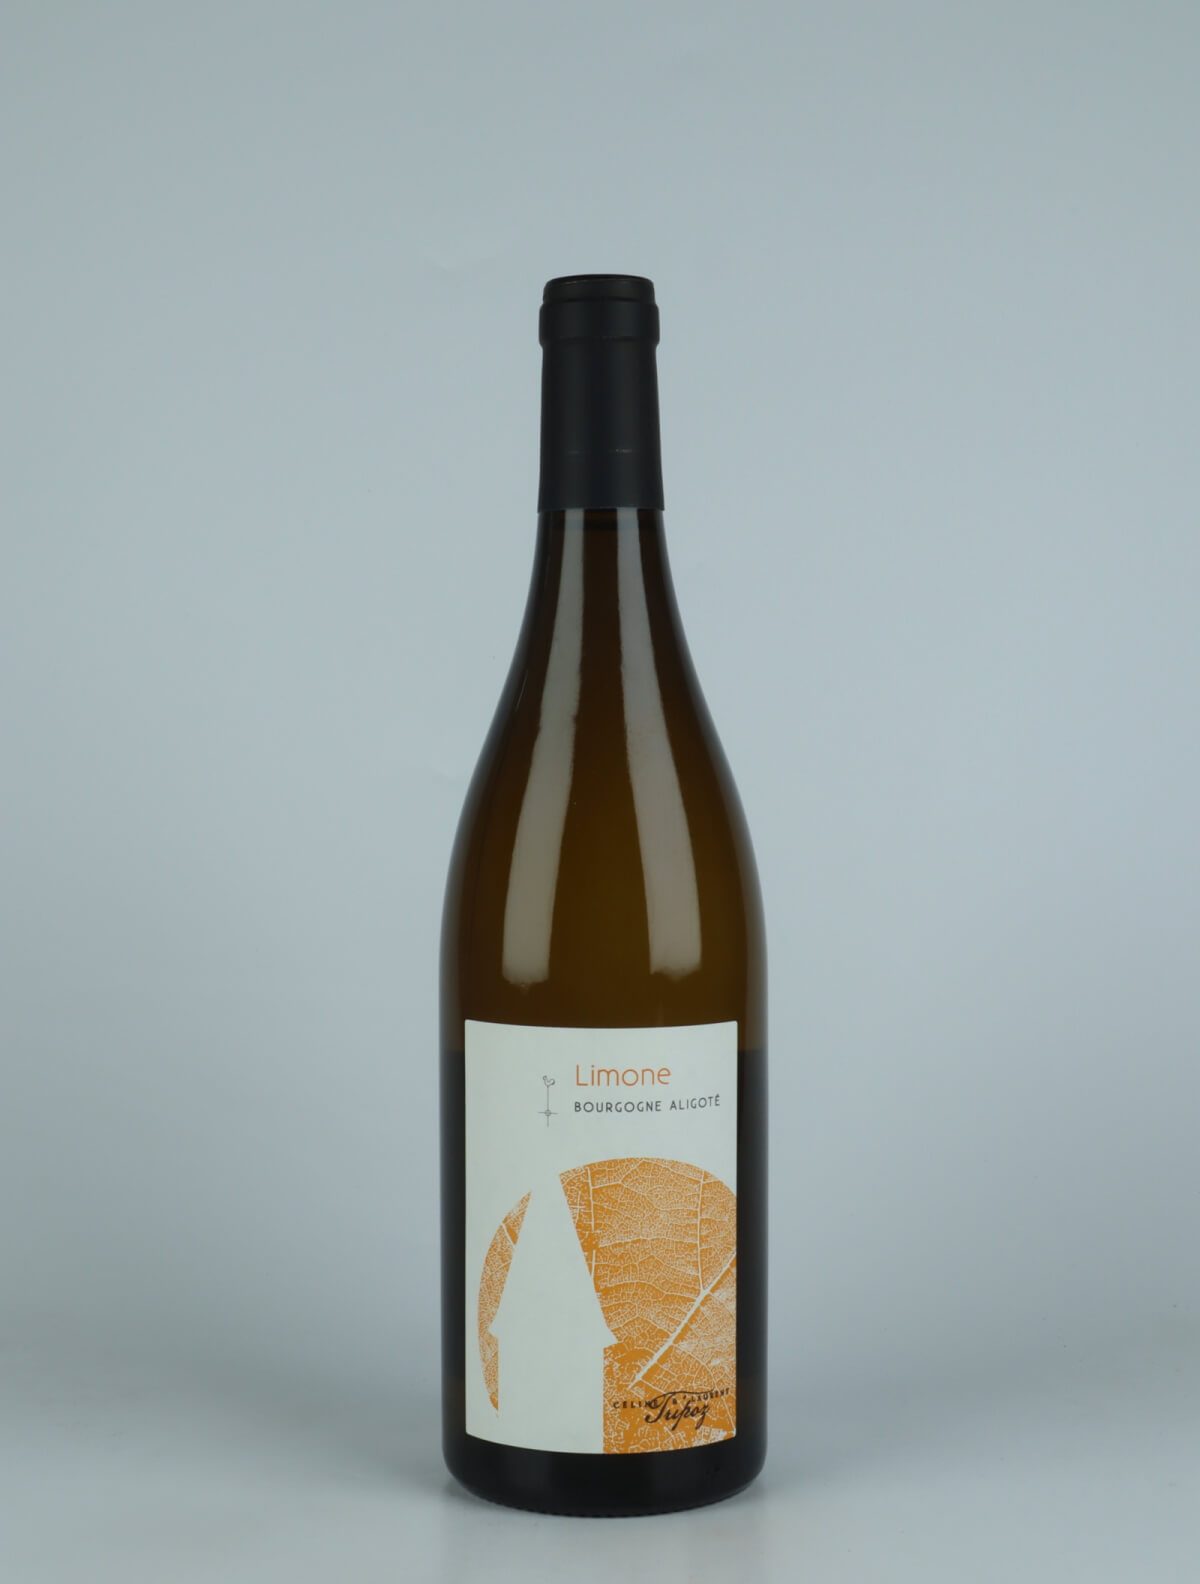 A bottle 2022 Bourgogne Aligoté - Limone White wine from Céline & Laurent Tripoz, Burgundy in France